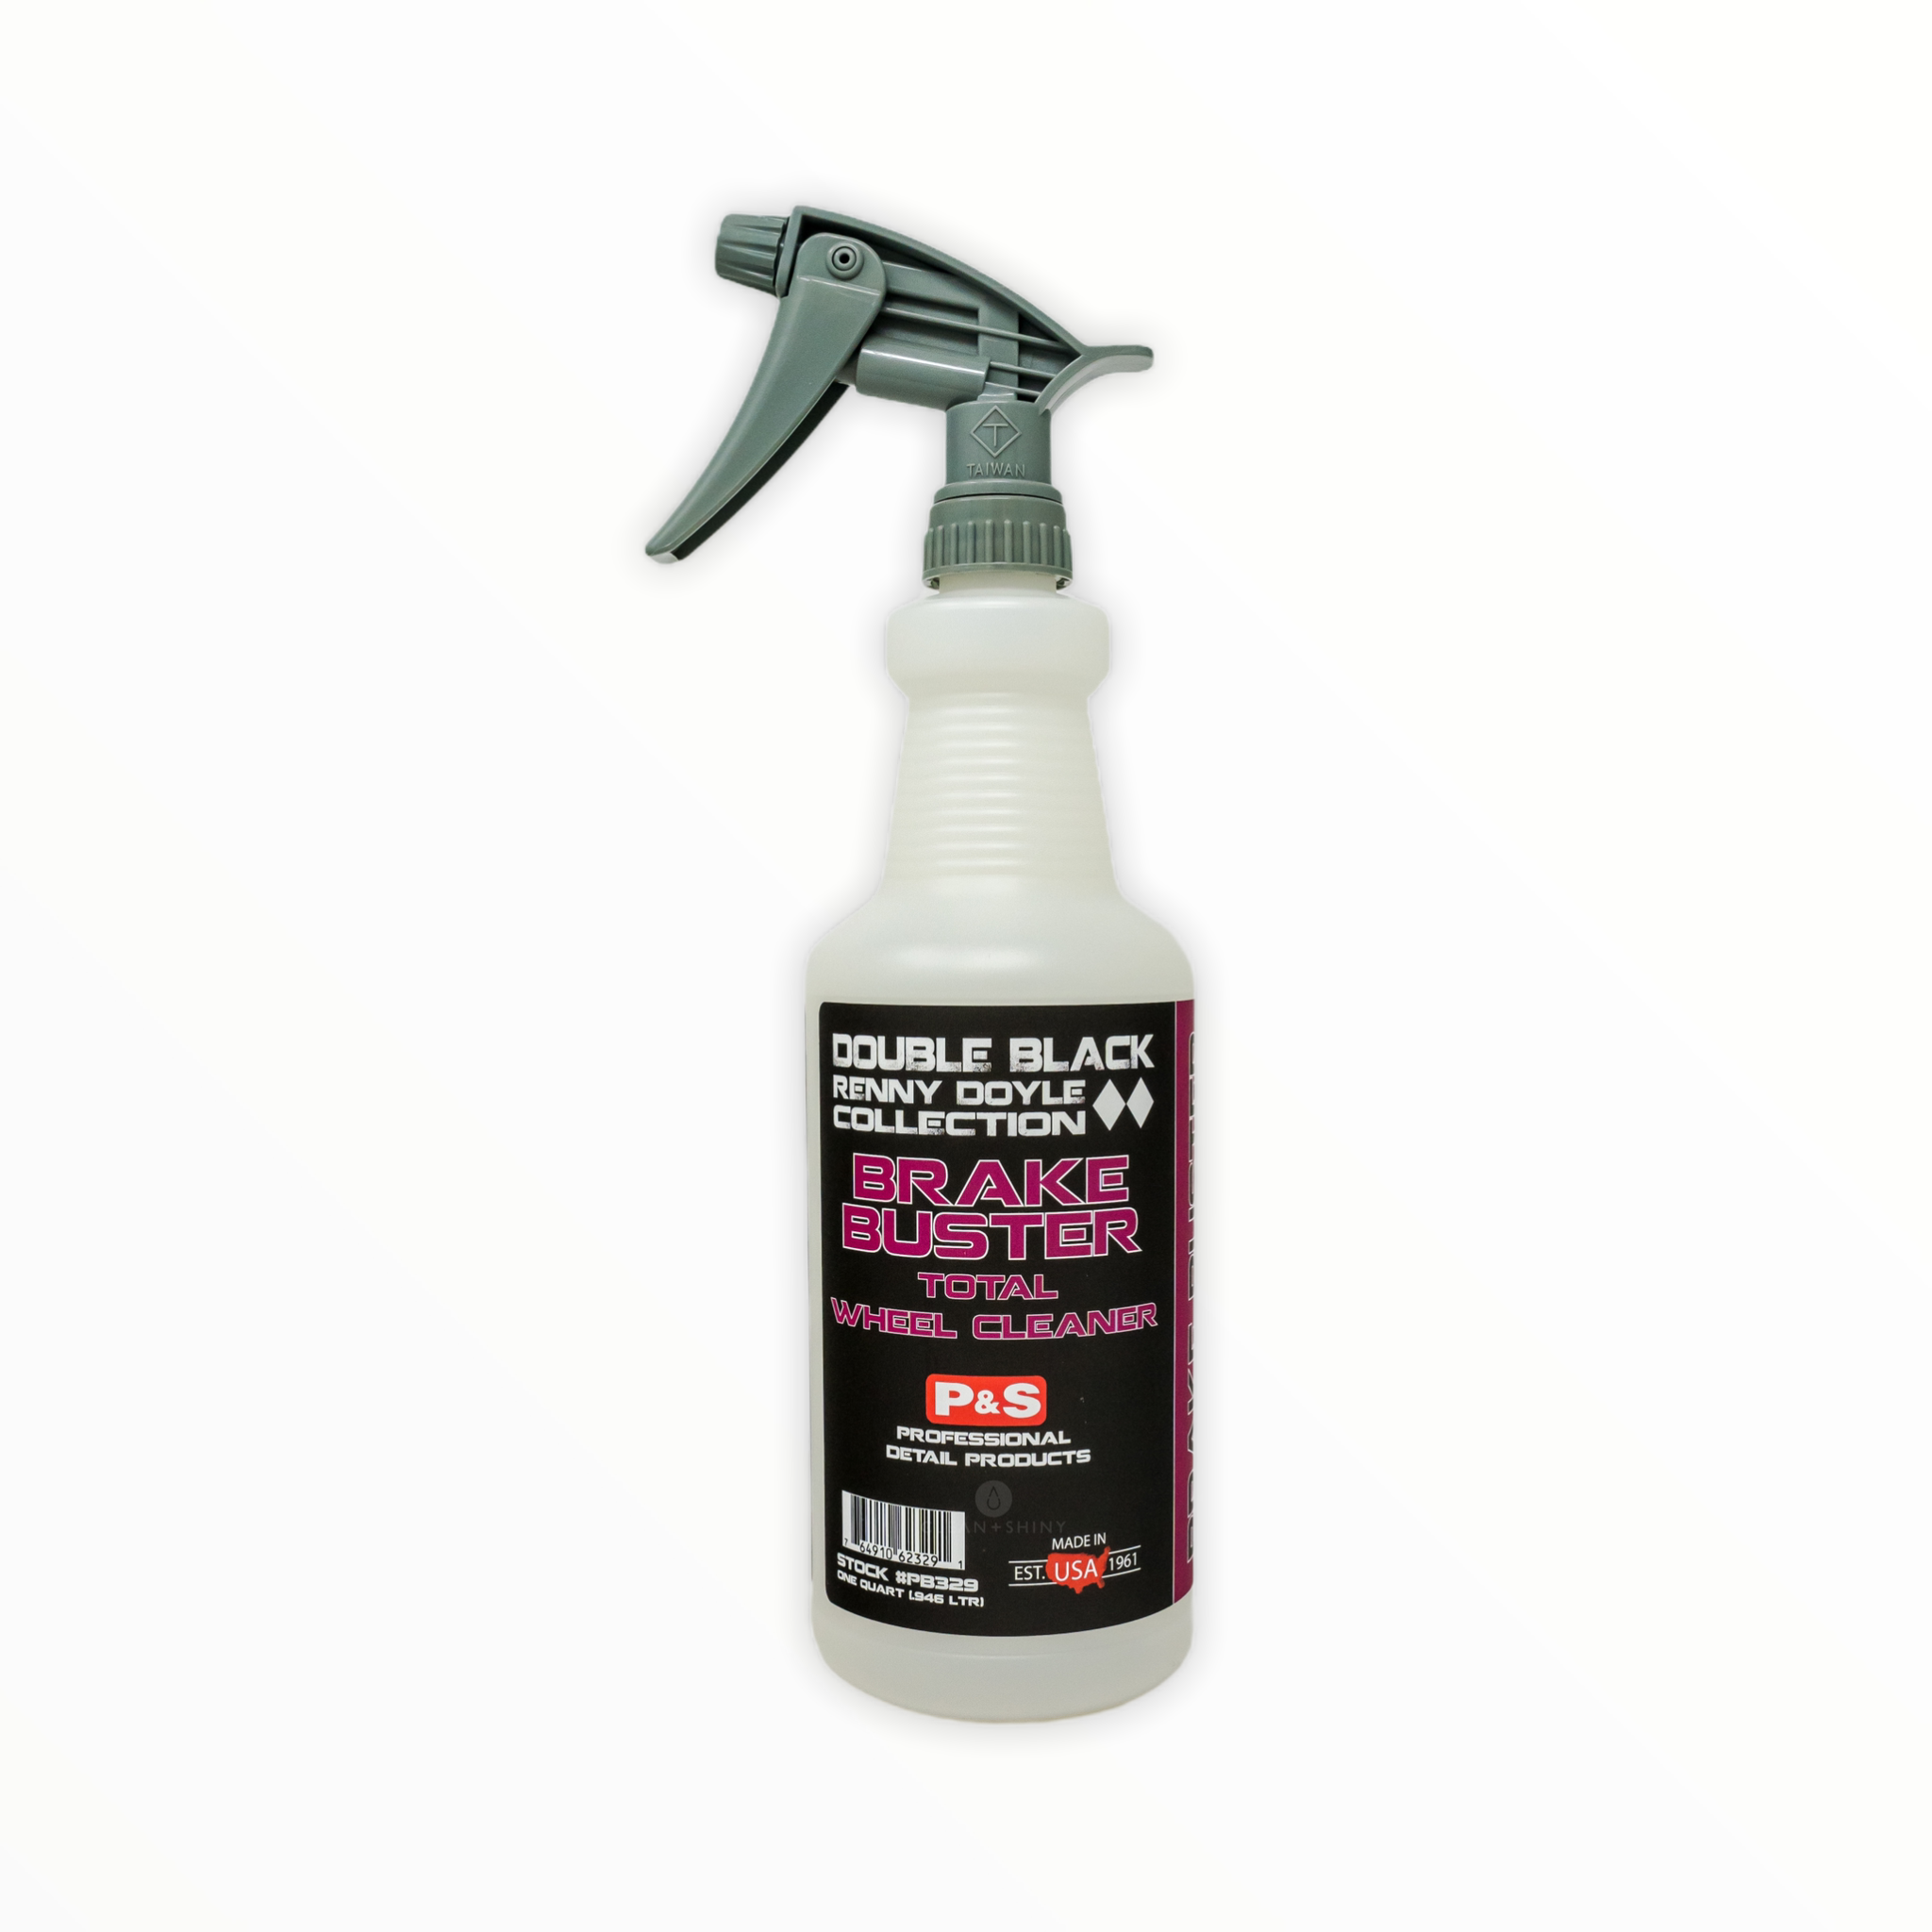 P&S Brake Buster 32oz Spray Bottle / Chemical Resistant Trigger